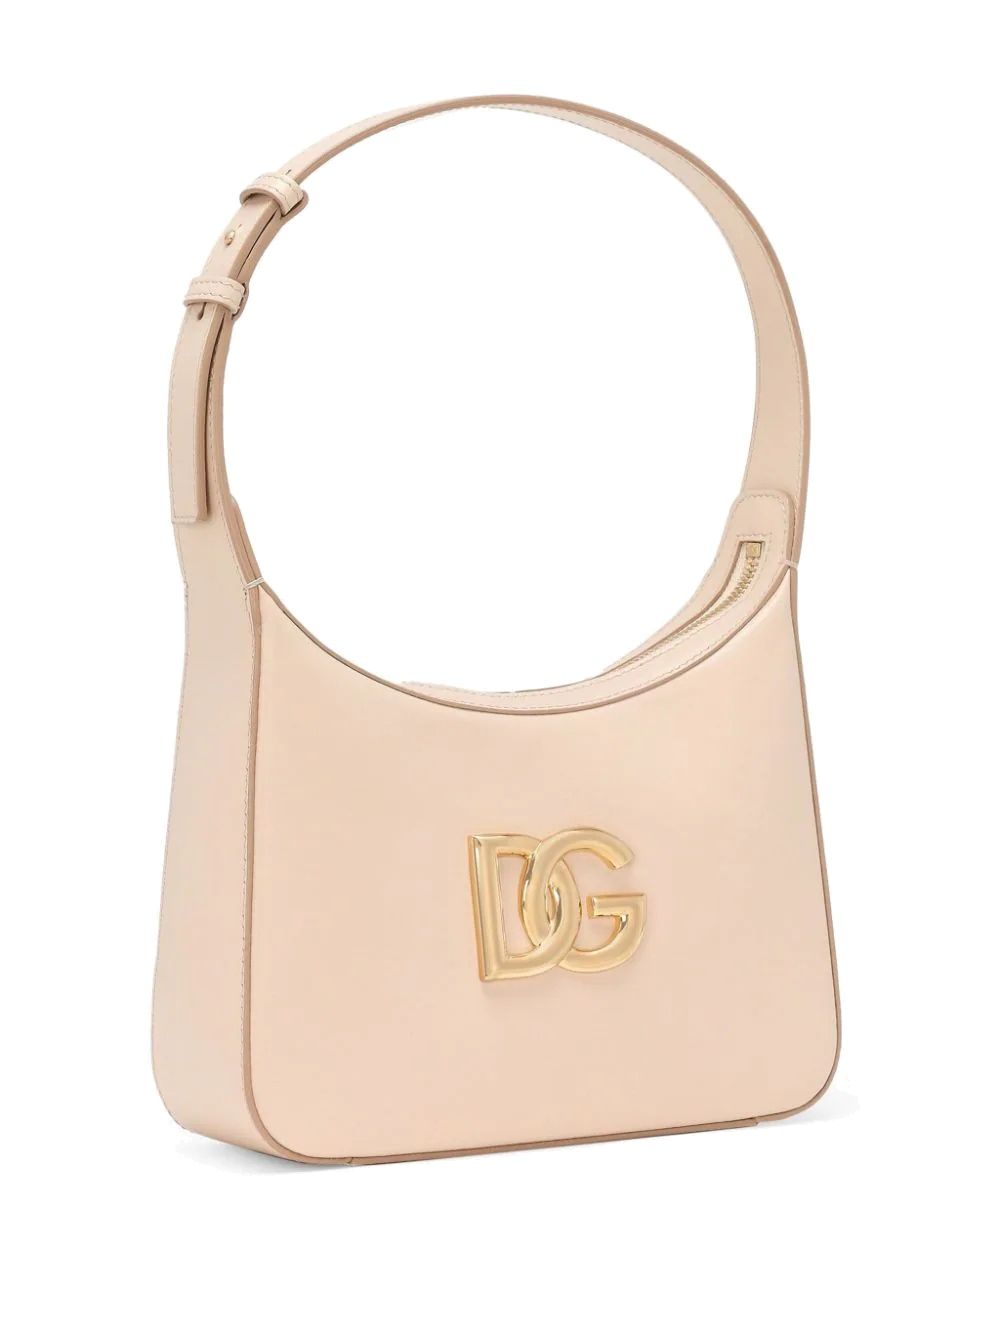 Light pink bag with gold logo